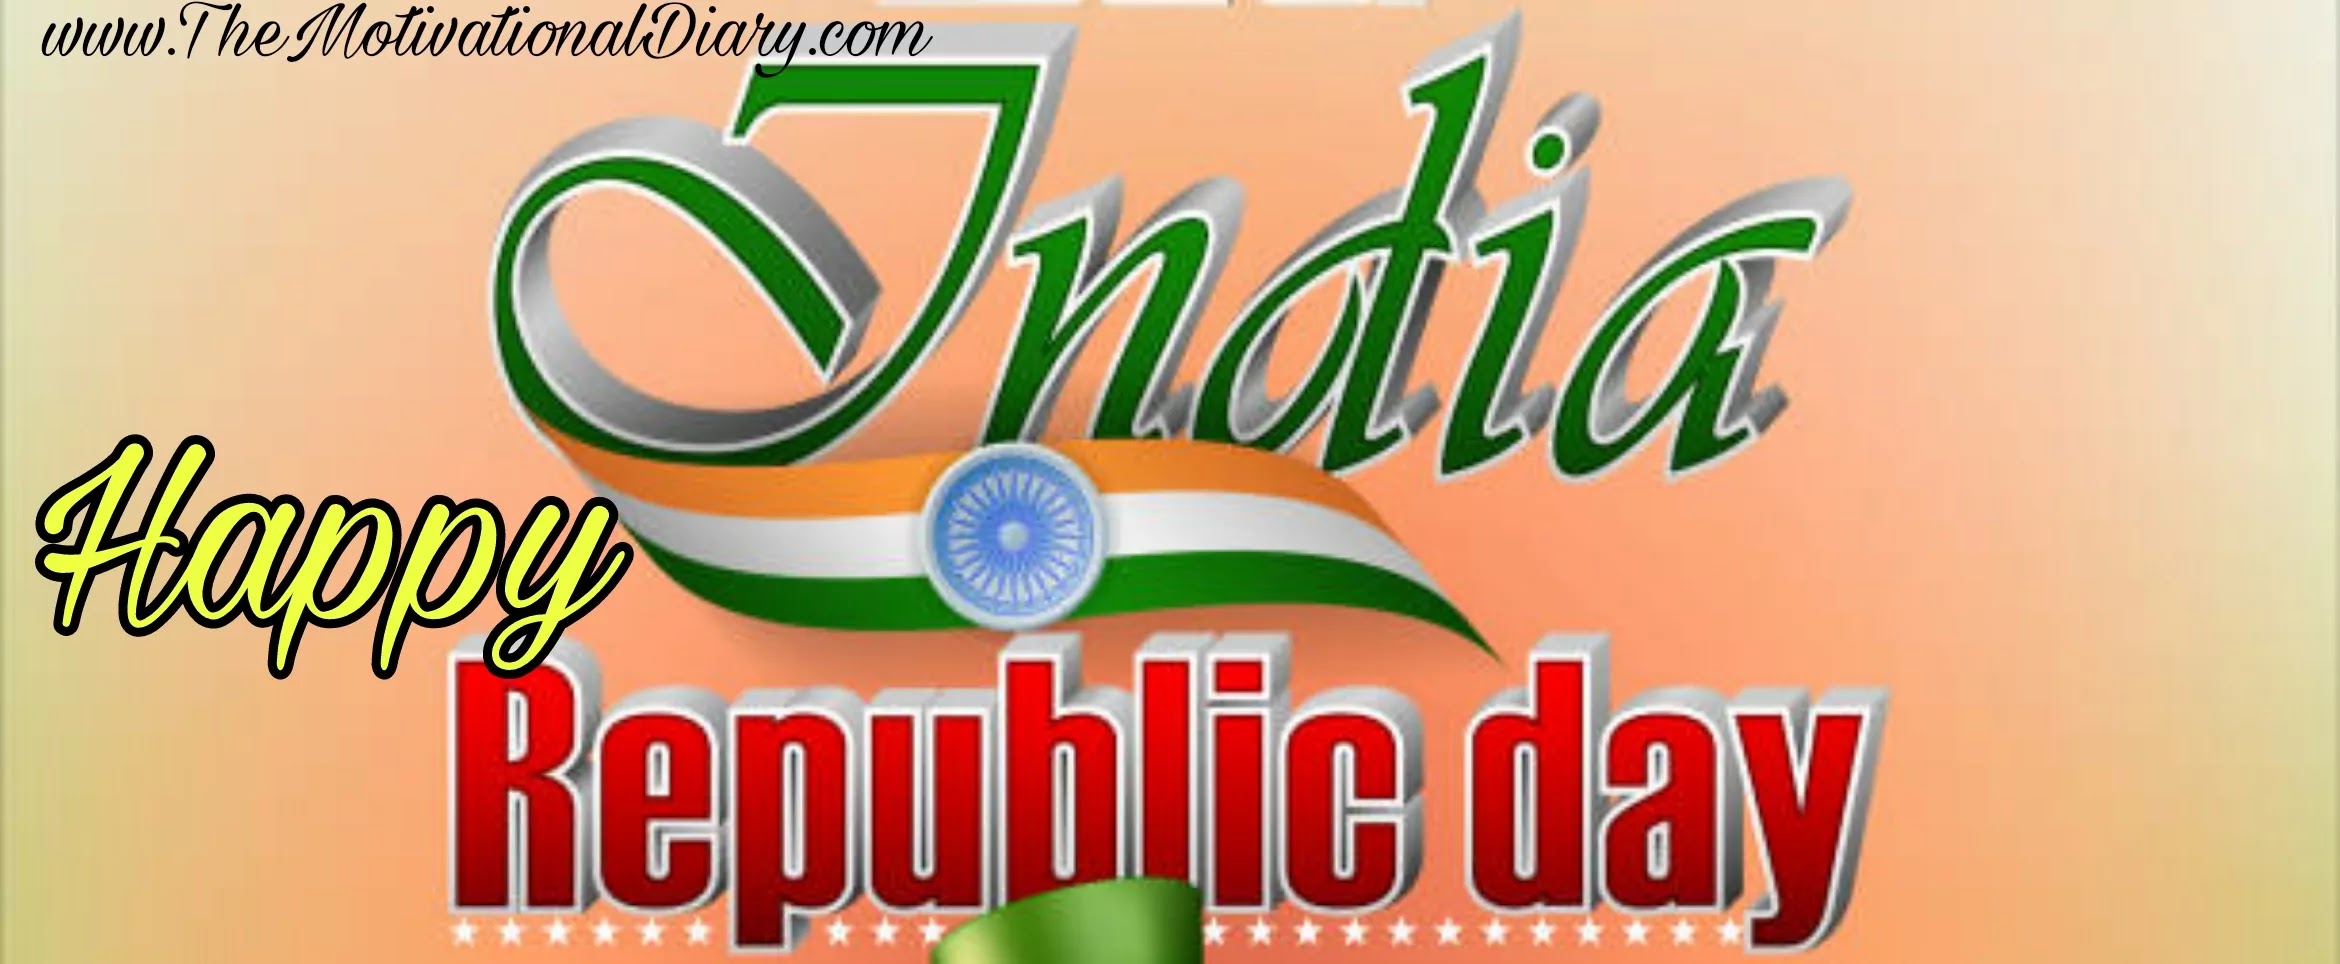 republic-day-india-images-pics-photo-2021-ram-maurya-the-motivational-diary